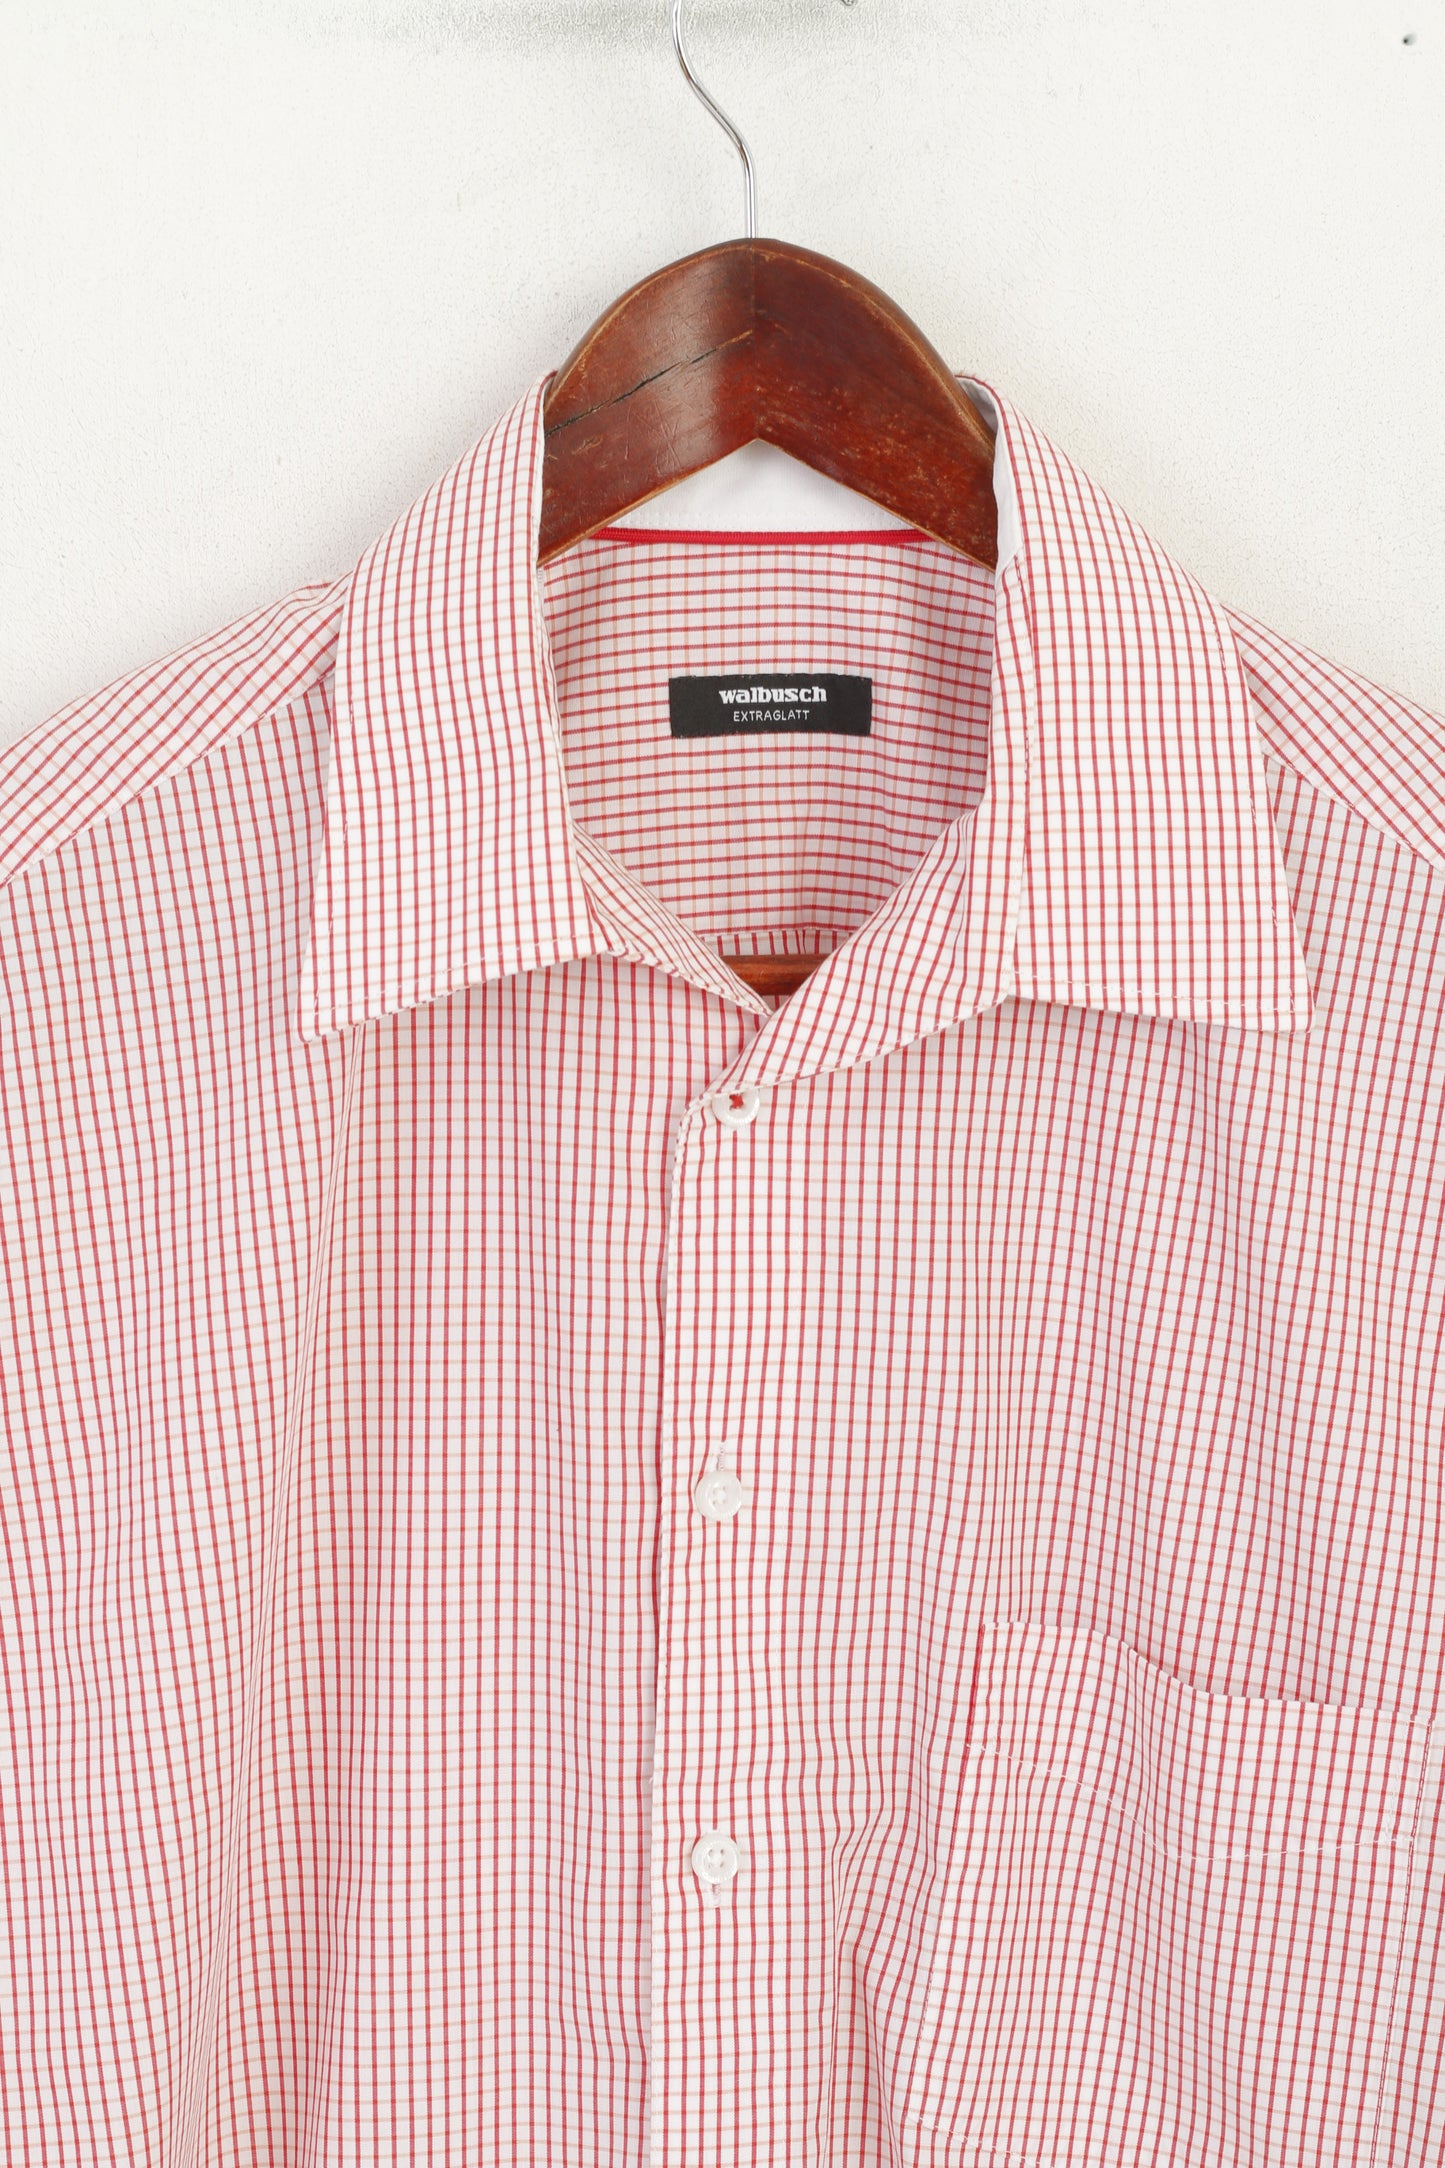 Walbusch Extraglatt Men 41 L Casual Shirt Red Check Cotton Short Sleeve Comfort Fit Top